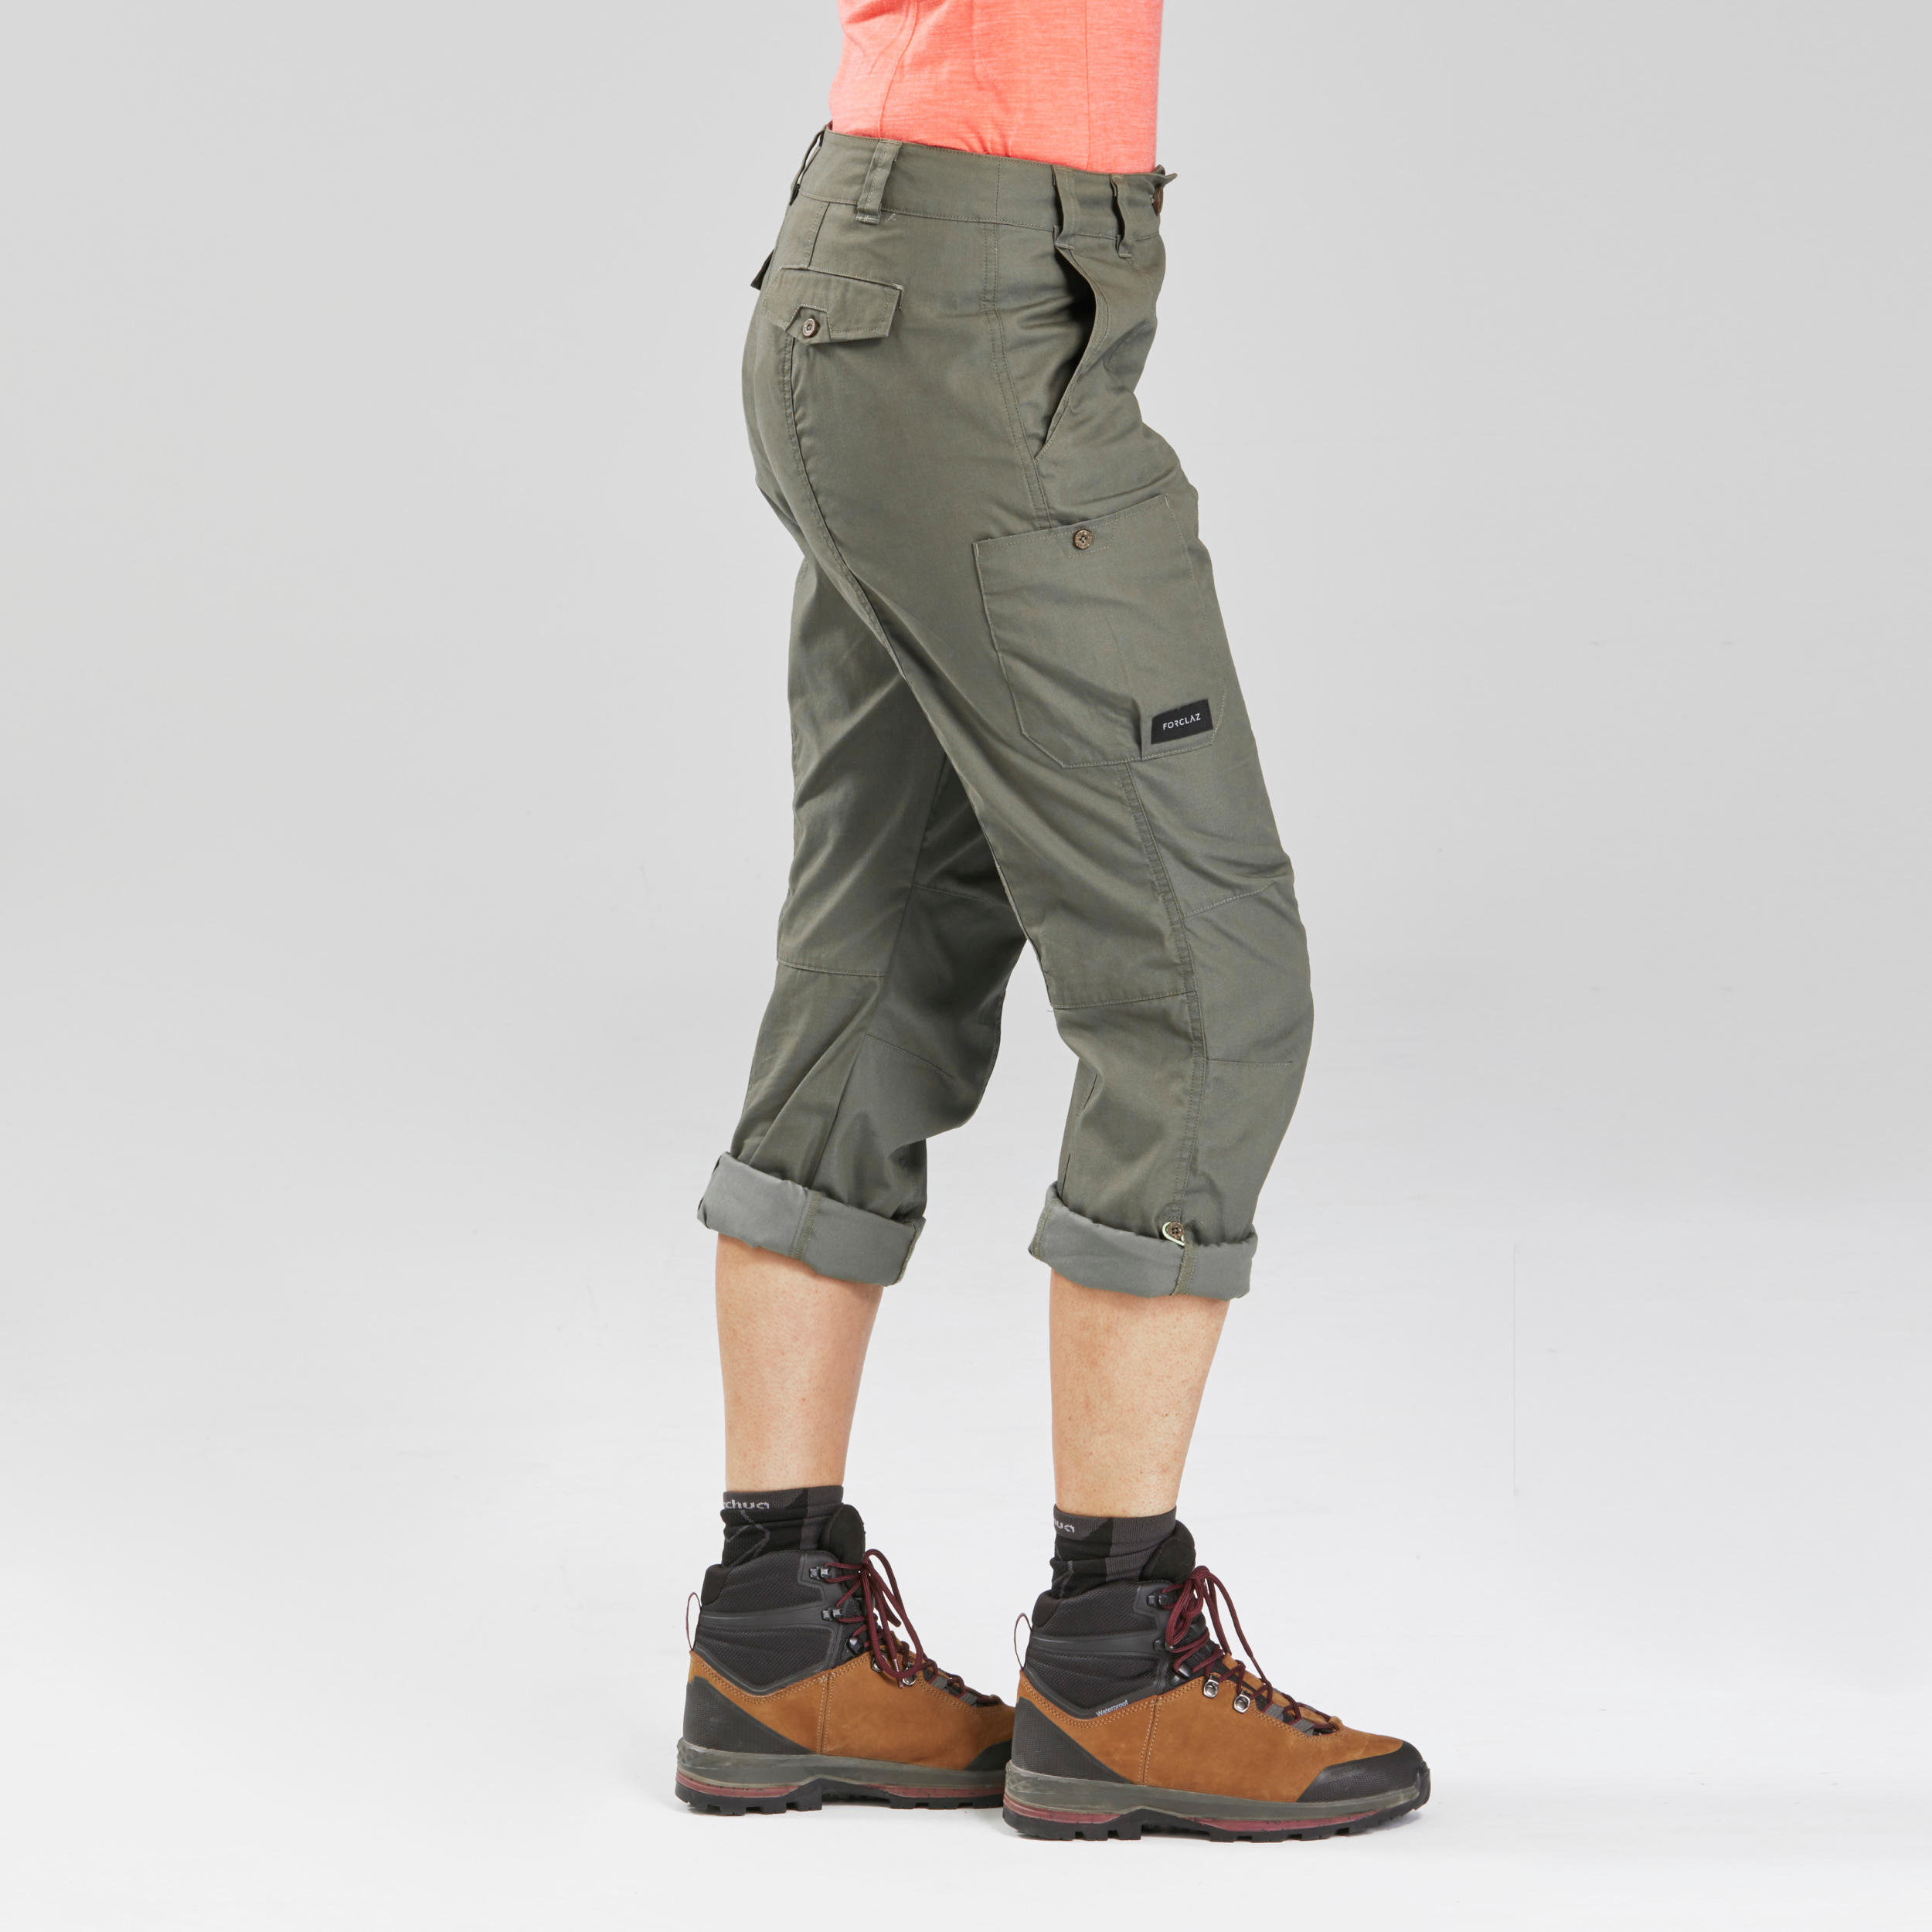 Womens Travel Trousers  Lightweight Packable  Rohan